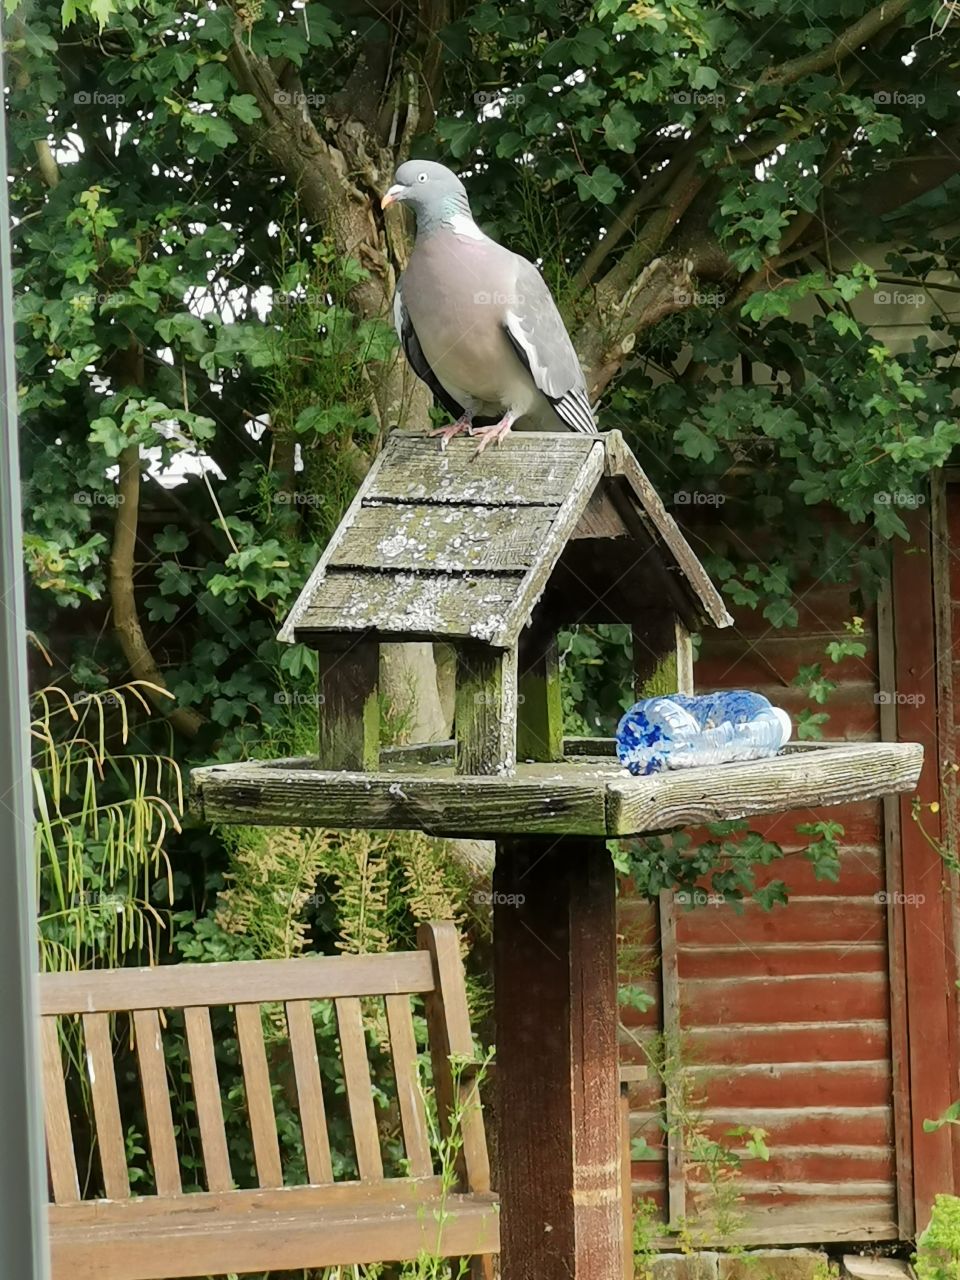 Pigeon sitting on bird house with makeshift bottle feeder